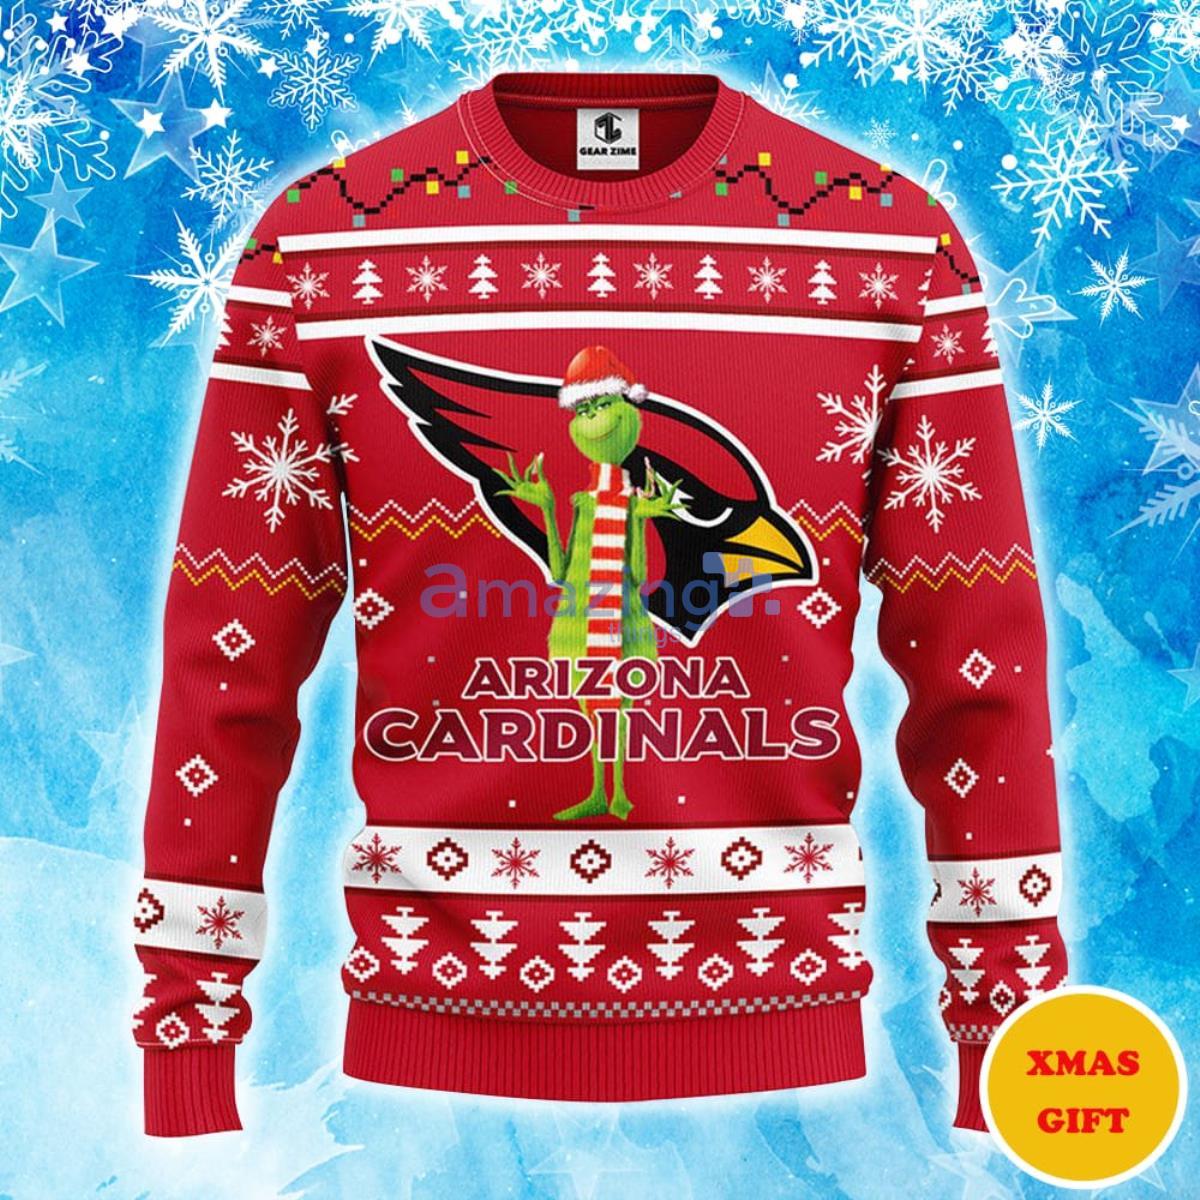 Custom Arizona Cardinals Jersey White - Ingenious Gifts Your Whole Family